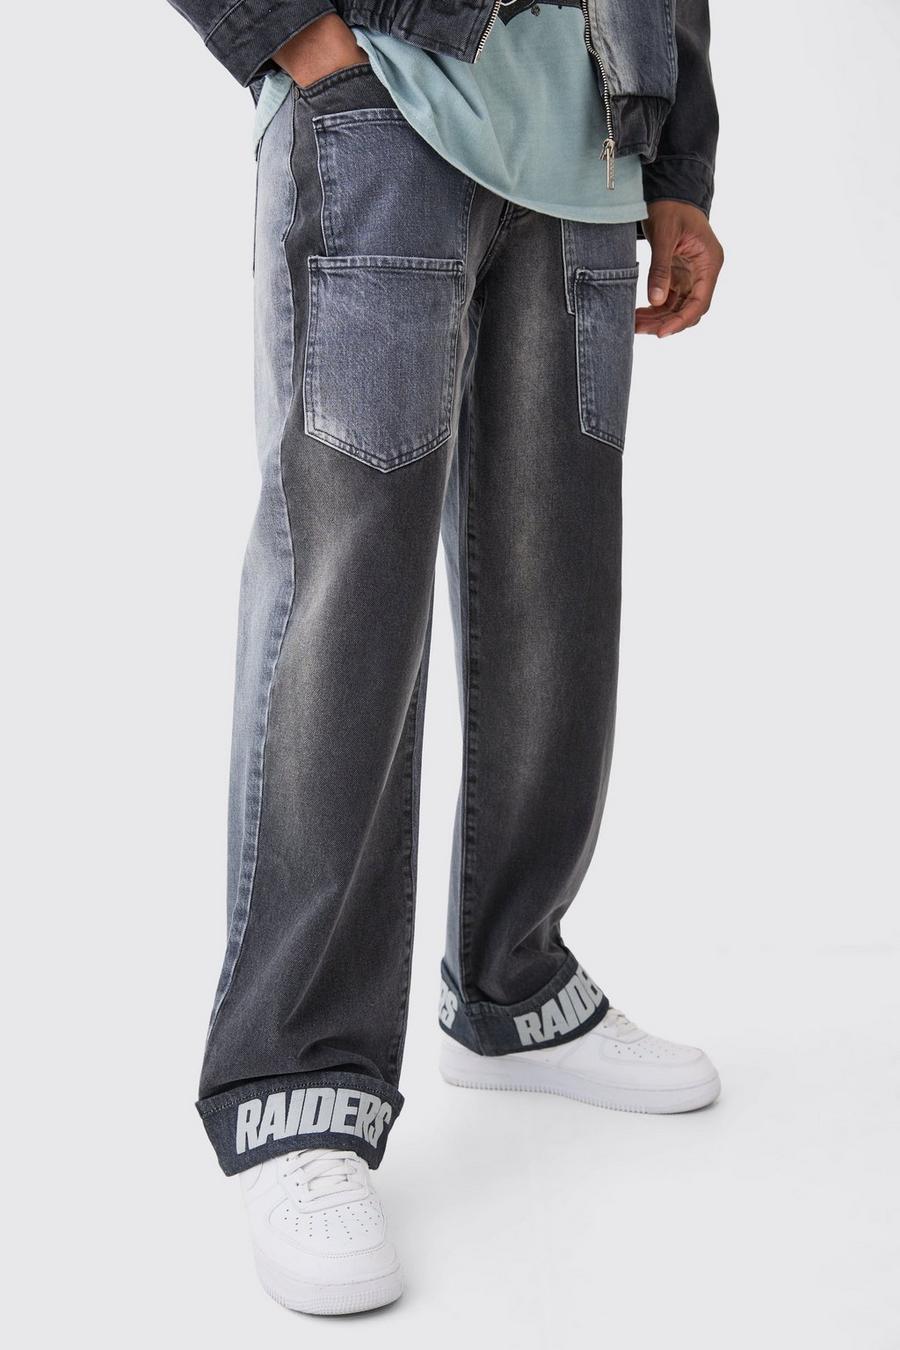 Jeans NFL Raiders extra comodi in denim rigido effetto patchwork con tasche multiple, Charcoal